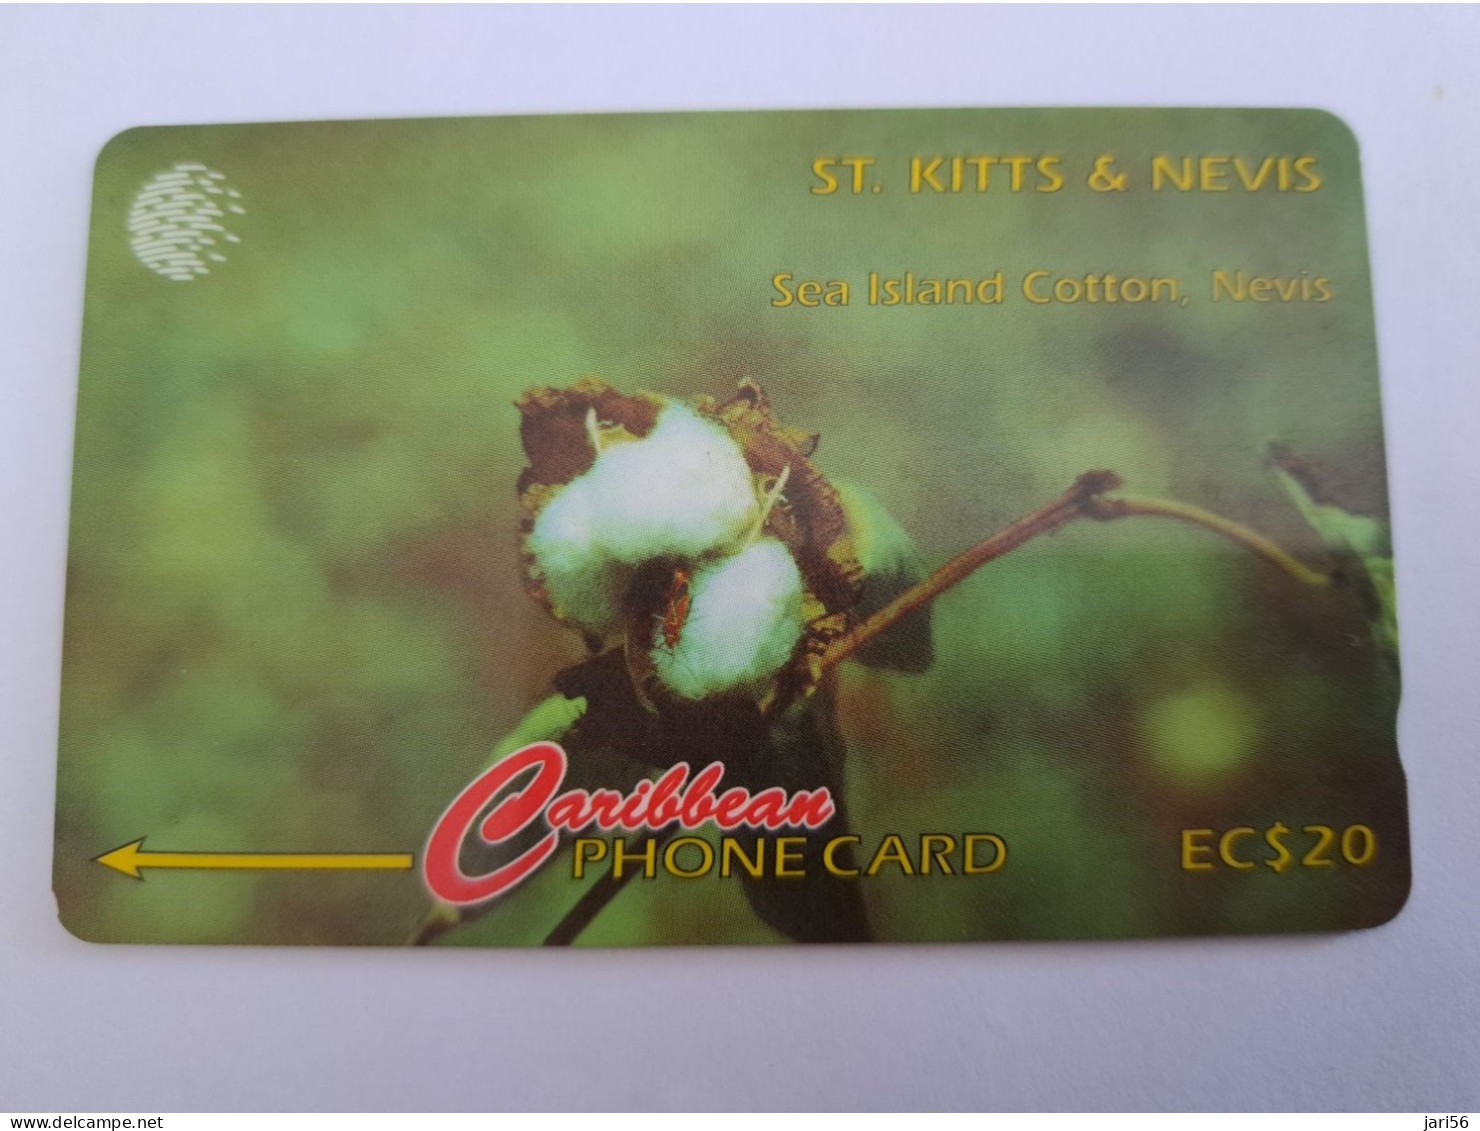 ST KITTS & NEVIS  GPT CARD $20 STK 77A / SEA ISLAND COTTON NEVIS   **13323** - St. Kitts & Nevis